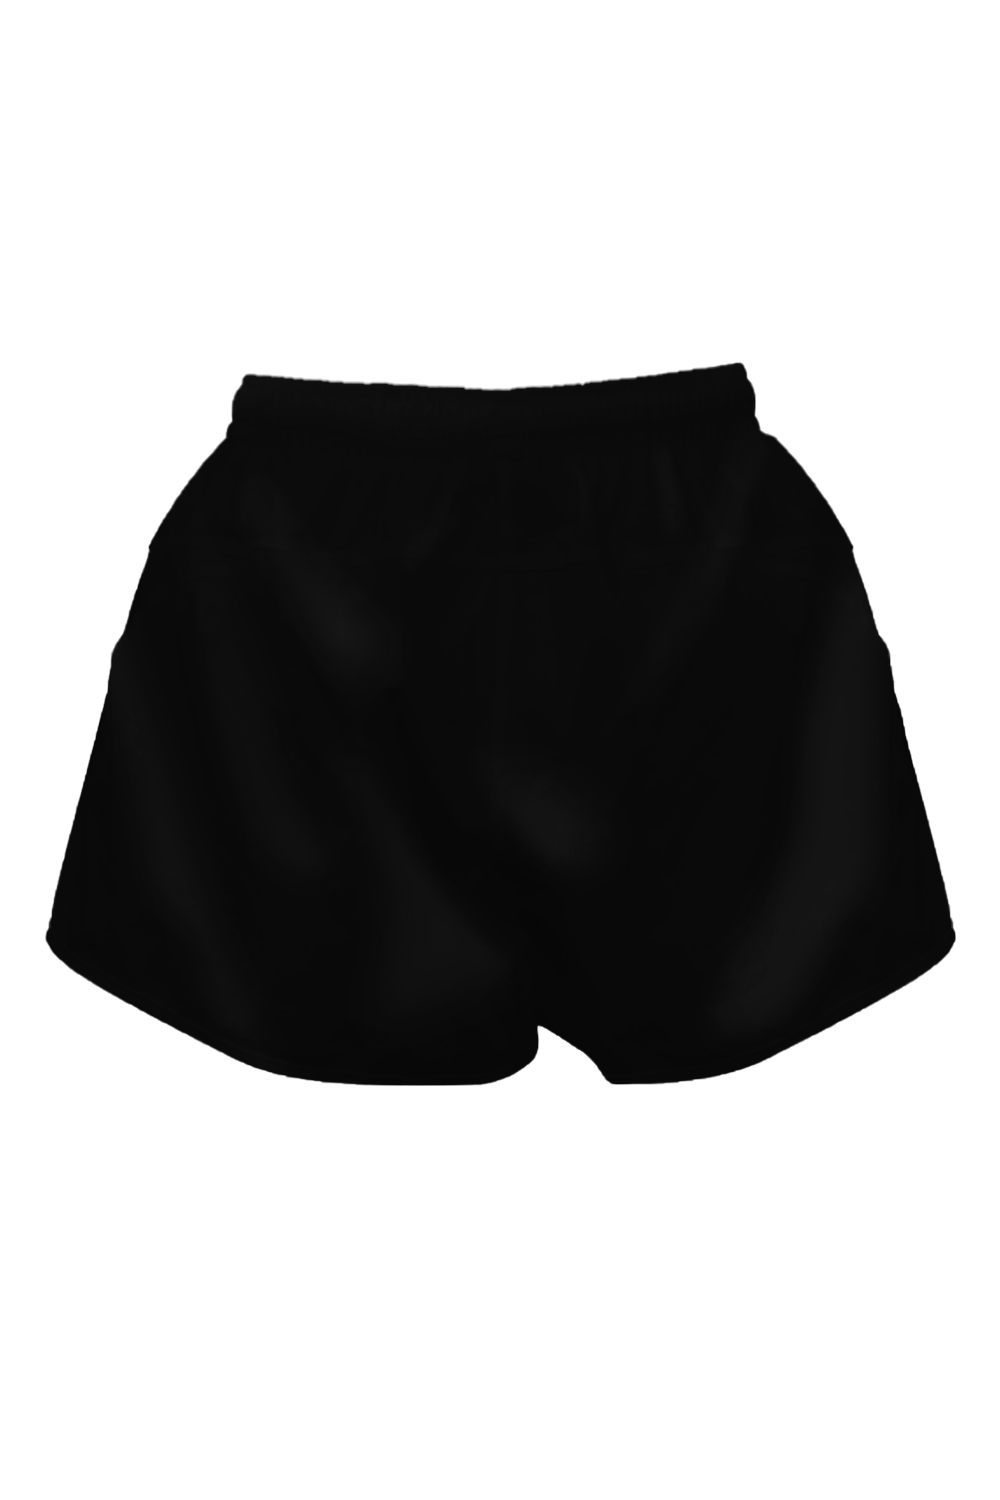 Racer Shorts (Black)